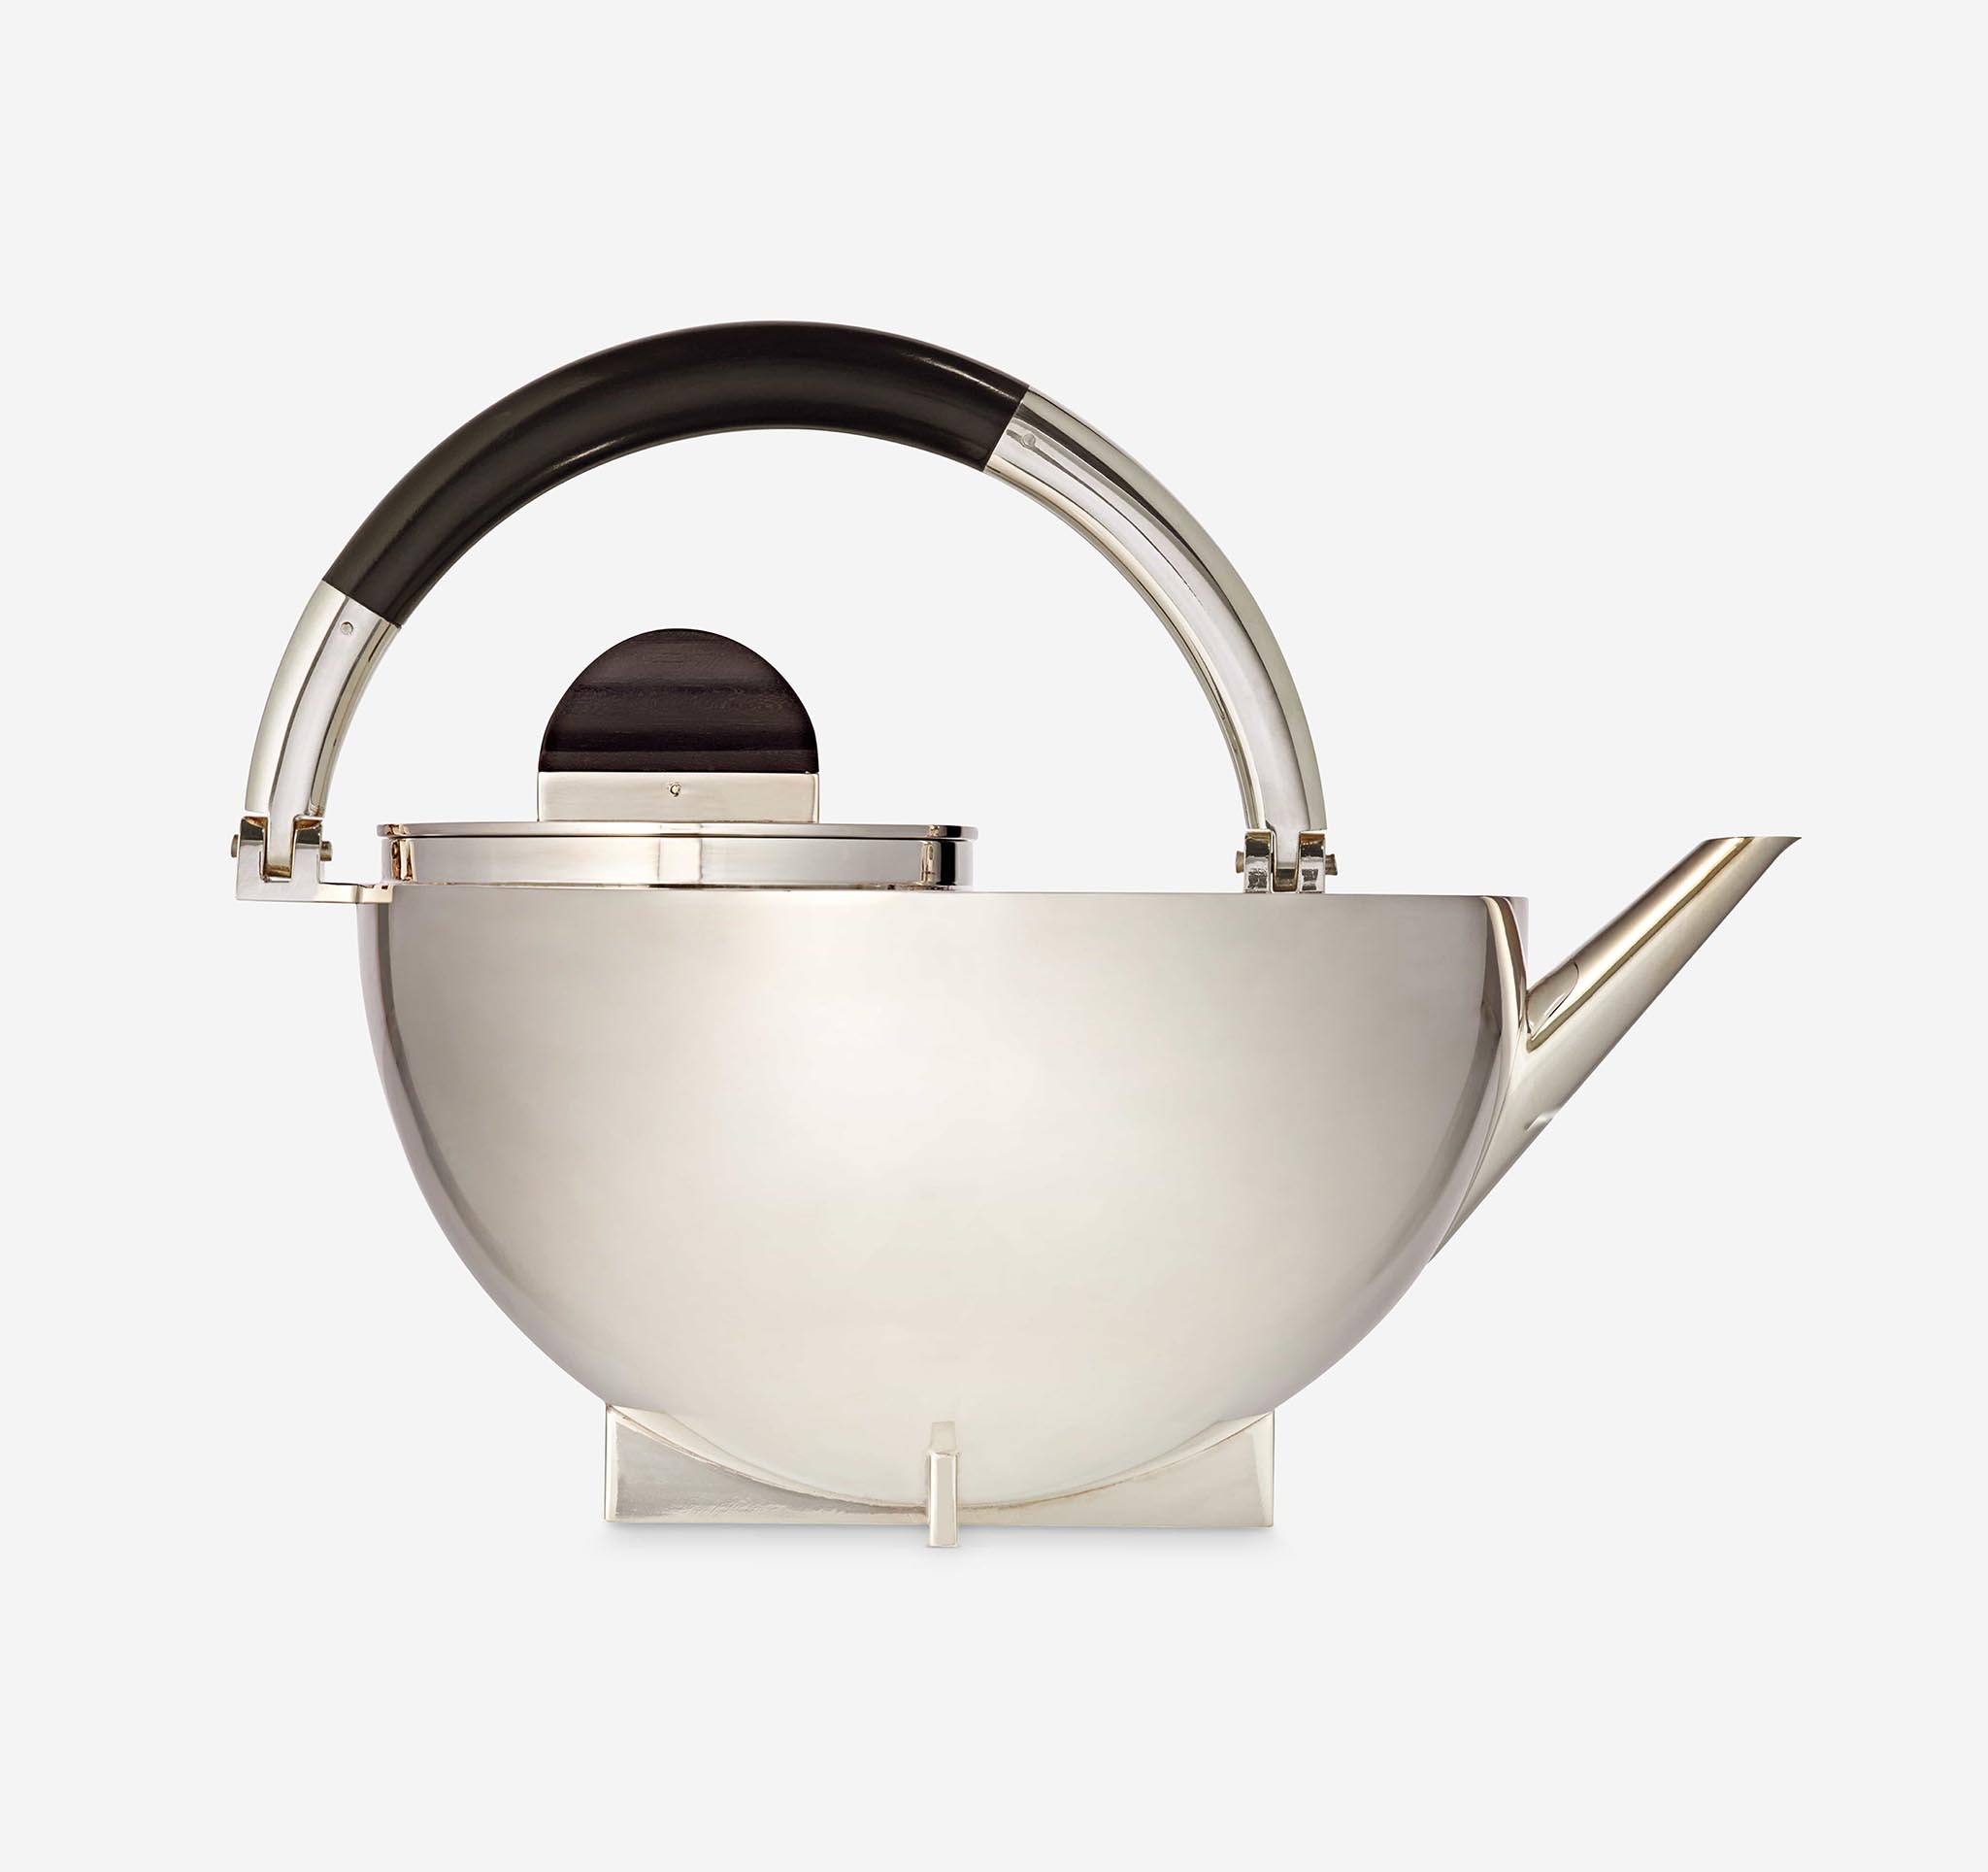 Bauhaus metal teapot by Marianne Brandt